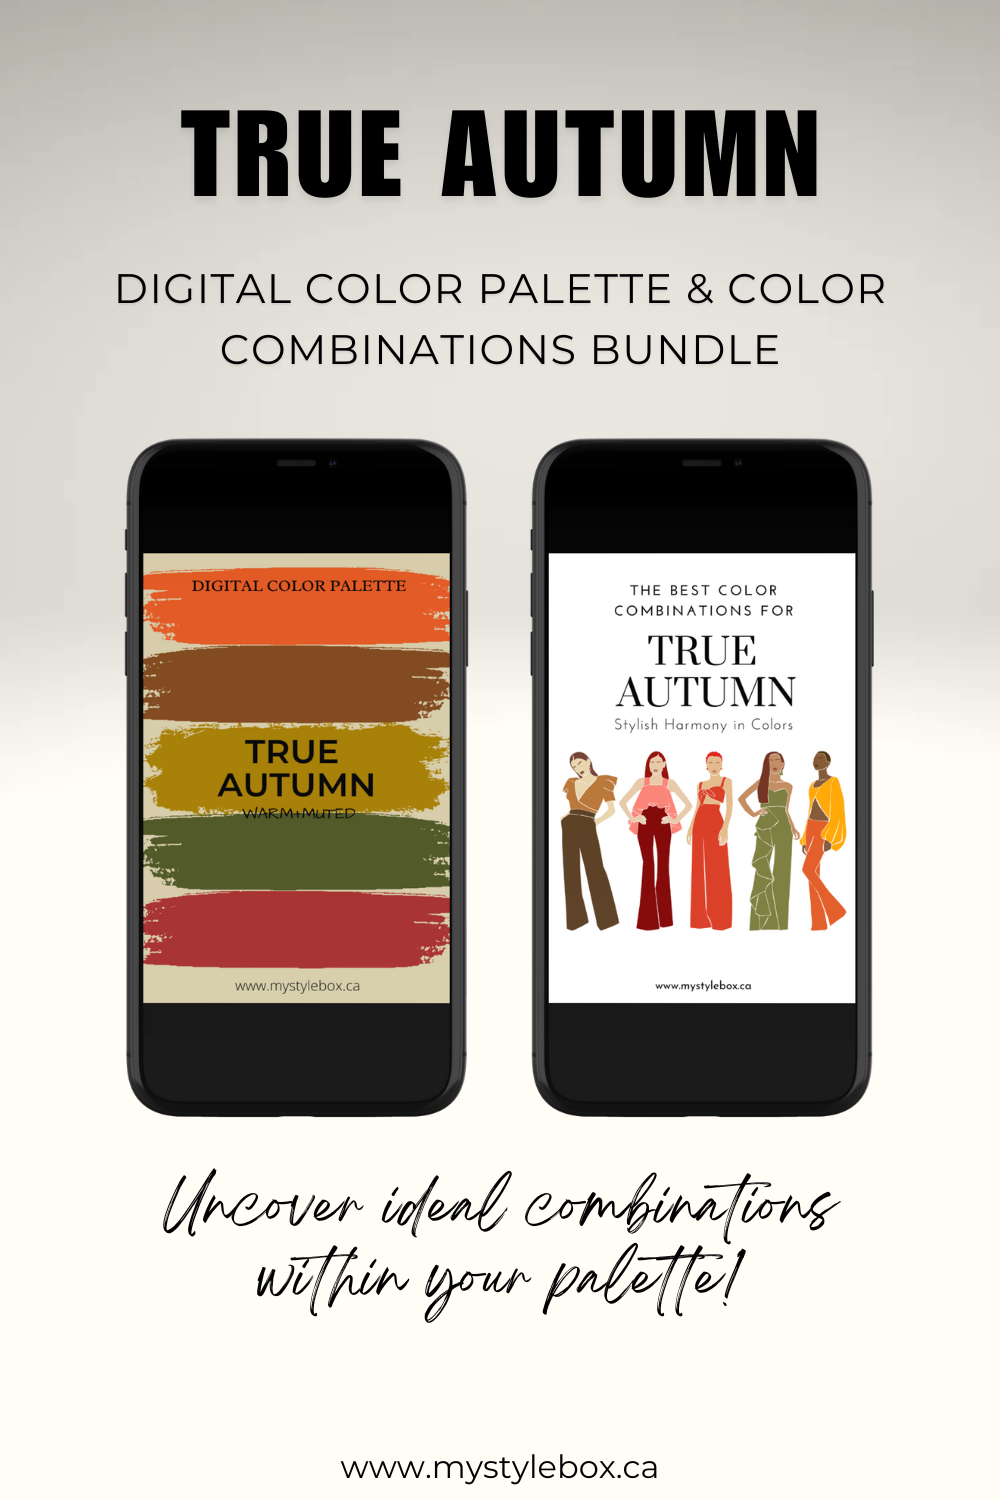 True (Warm) Autumn Season Digital Color Palette and Color Combinations